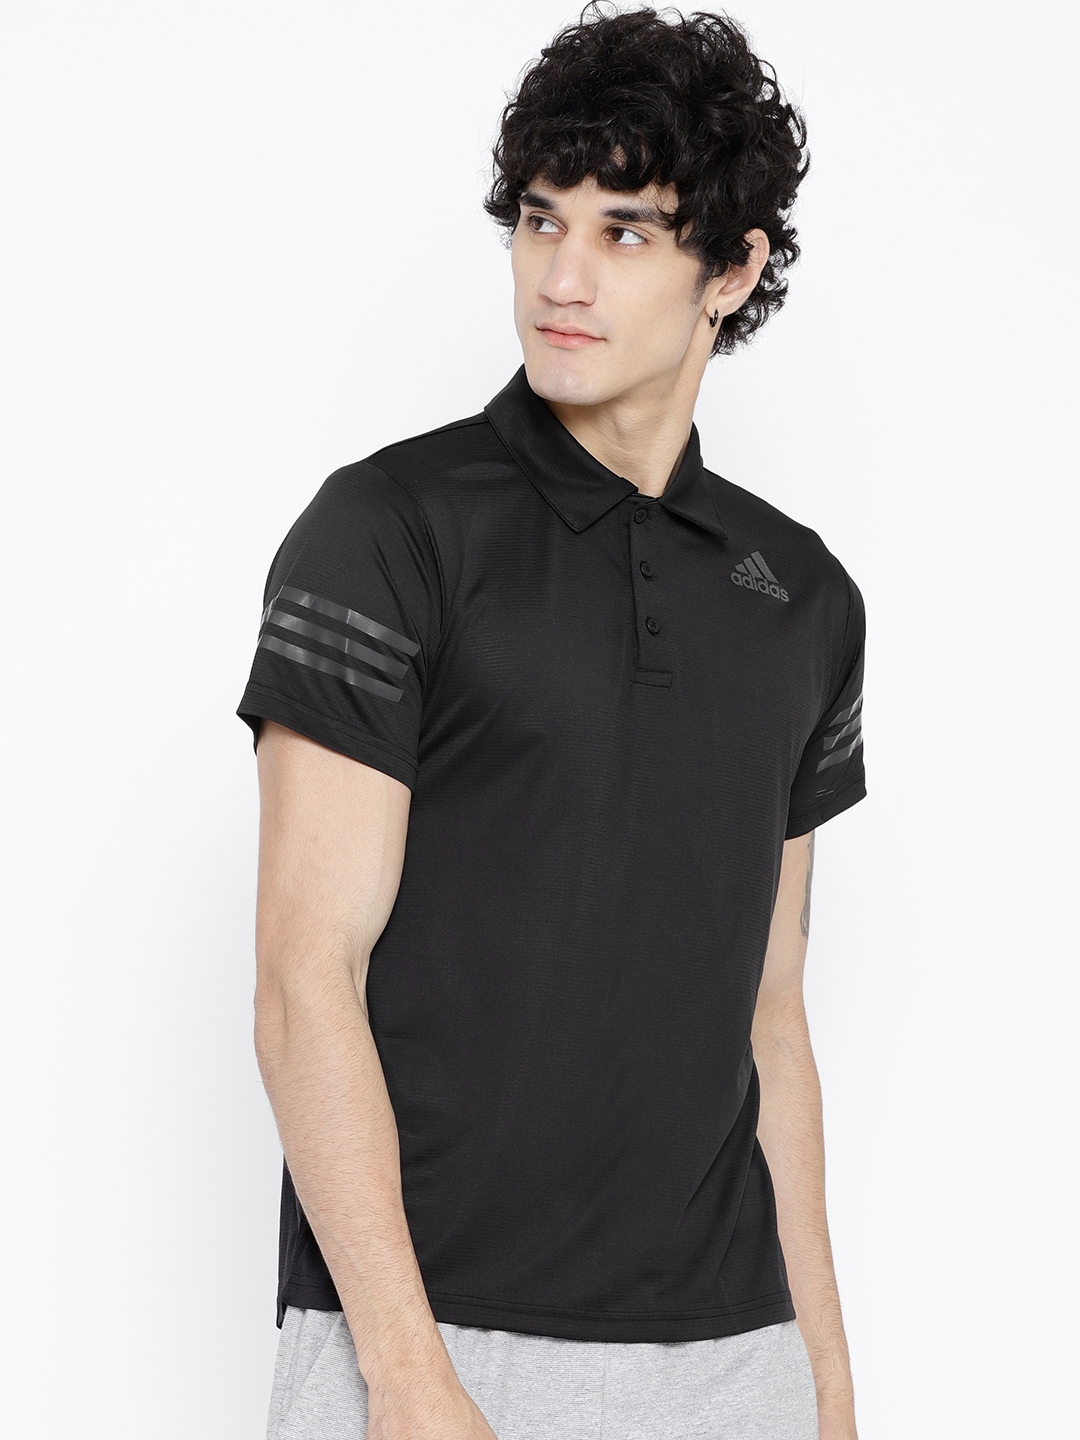 Buy ADIDAS Men Black Solid Climacool Training Shirt - Tshirts for | Myntra